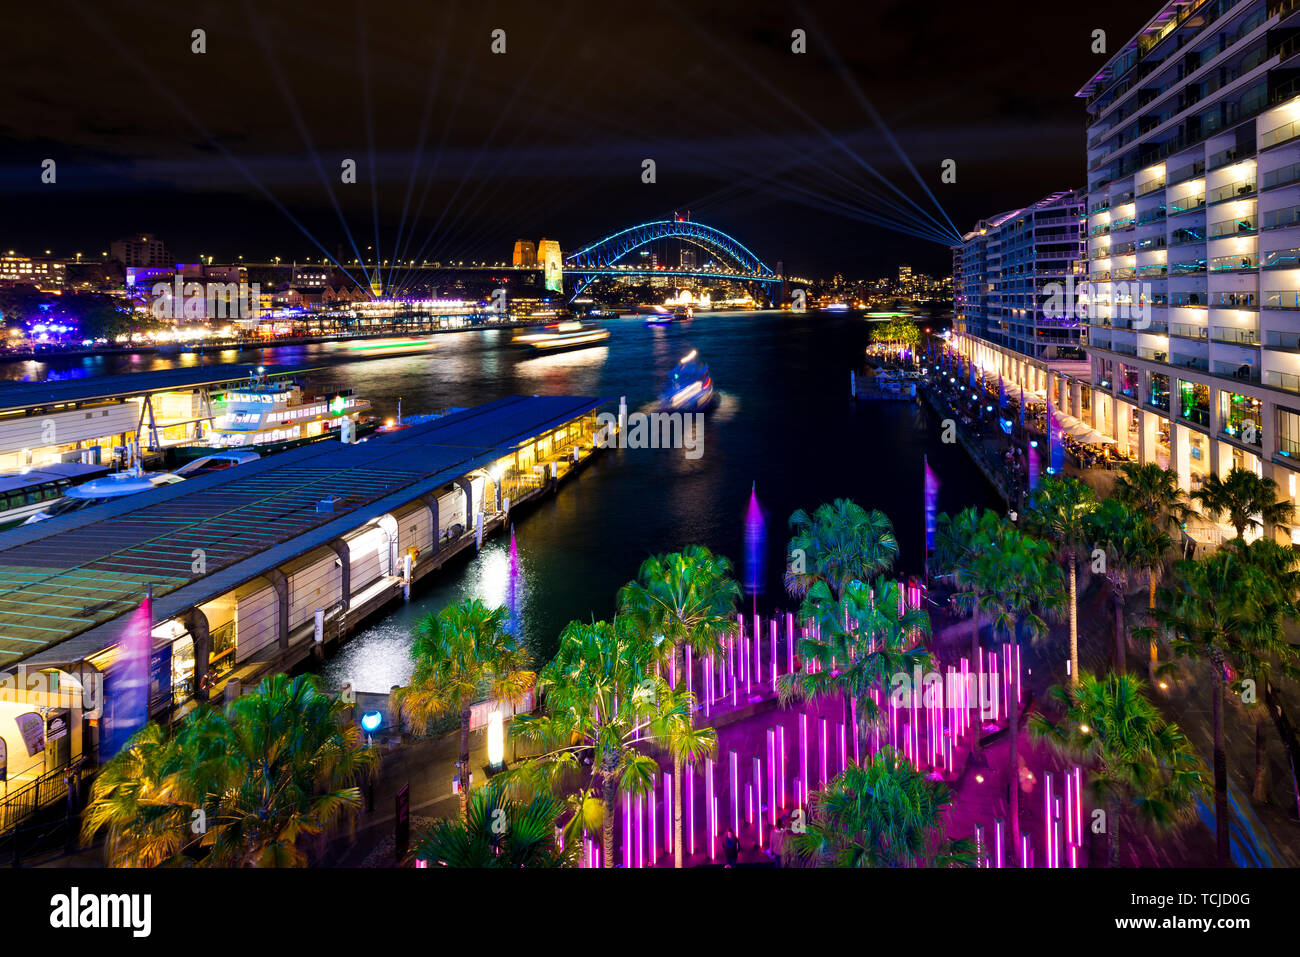 Sydney Harbour during Vivid, the annual light festival held in Sydney, Australia. Stock Photo